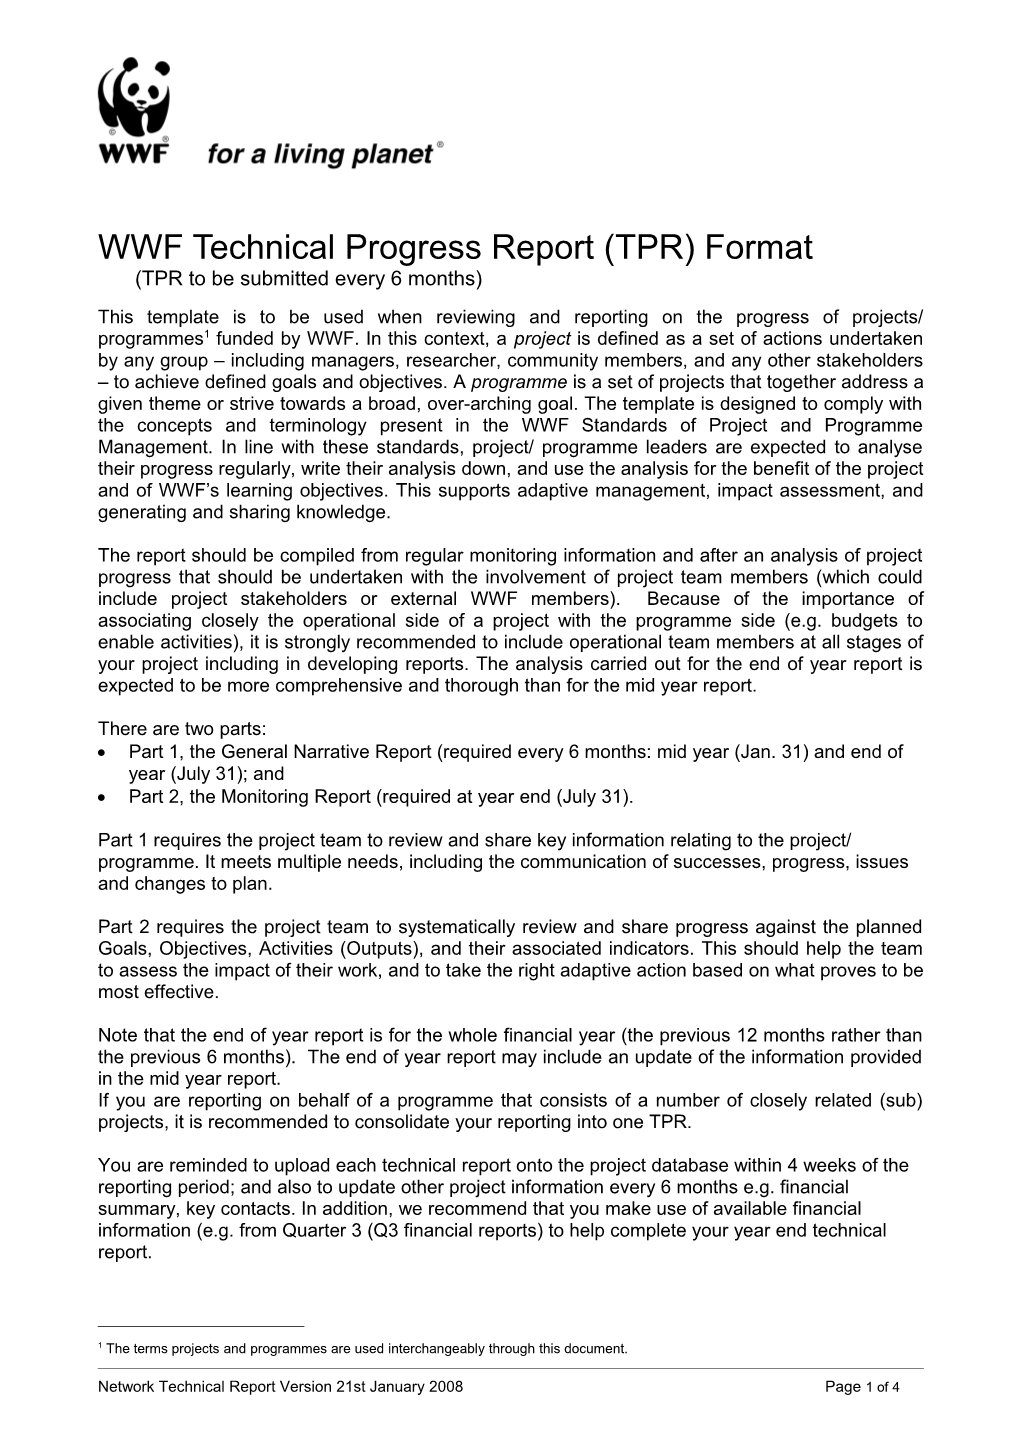 WWF Technical Progress Report